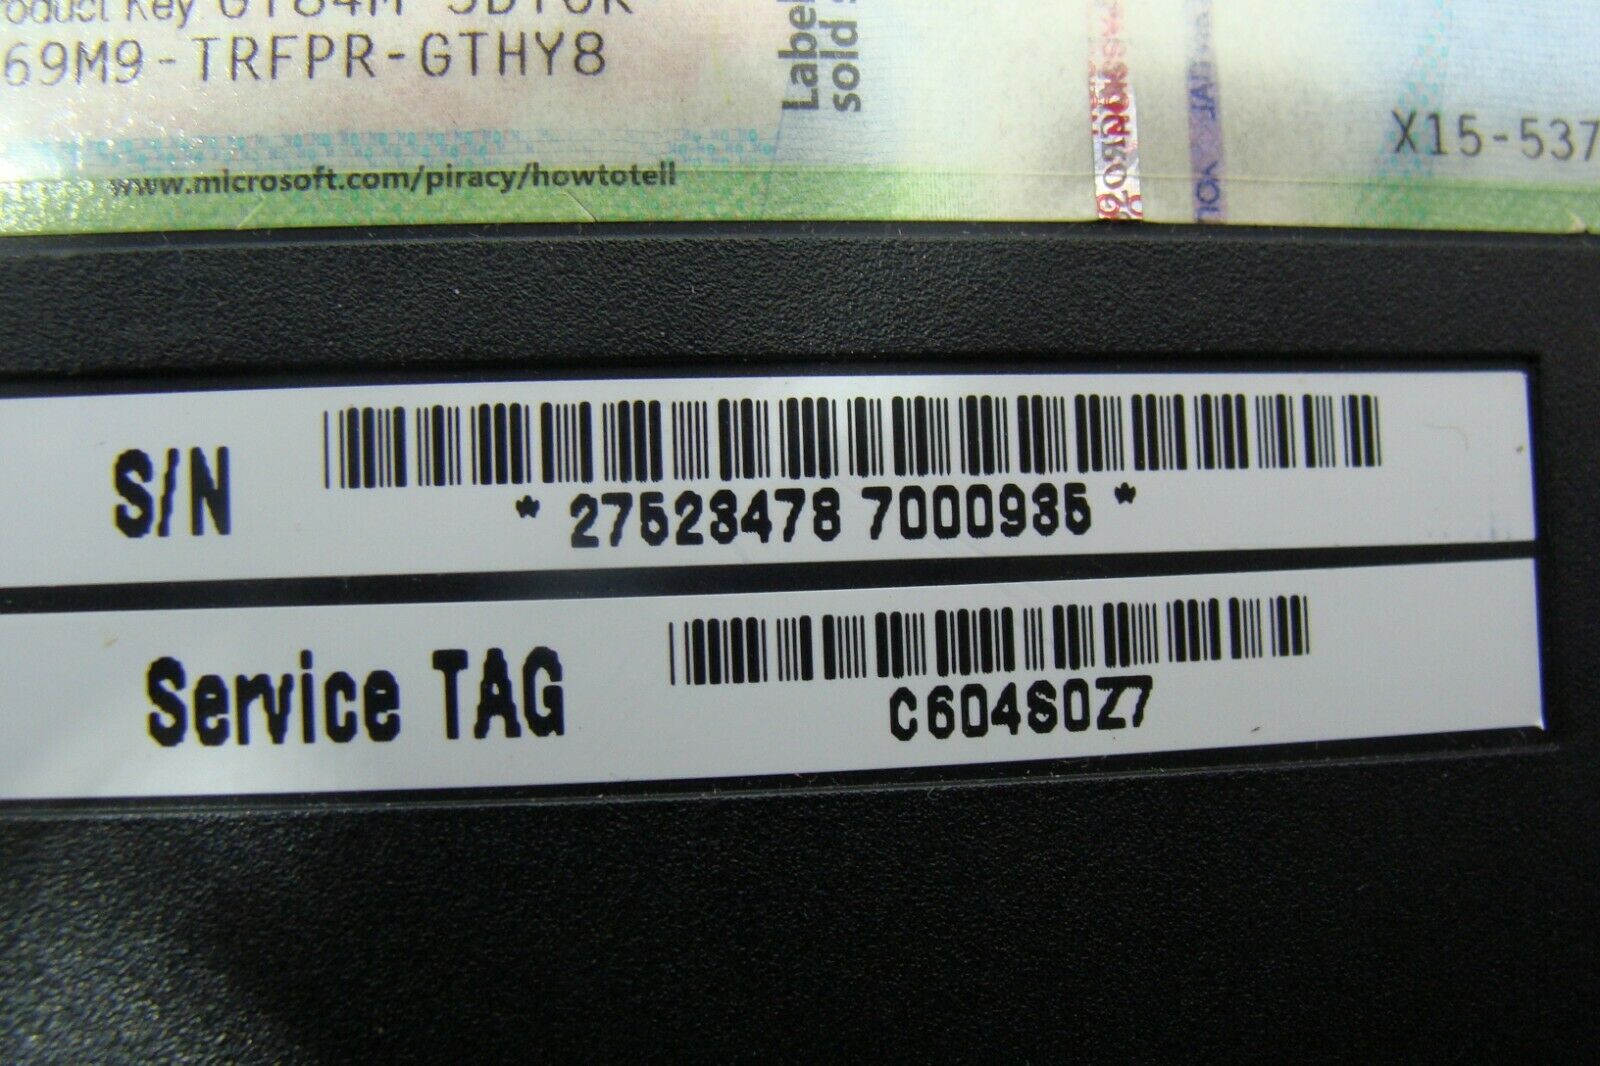 Sony VPCEB15FK PCG-71213P 15.6